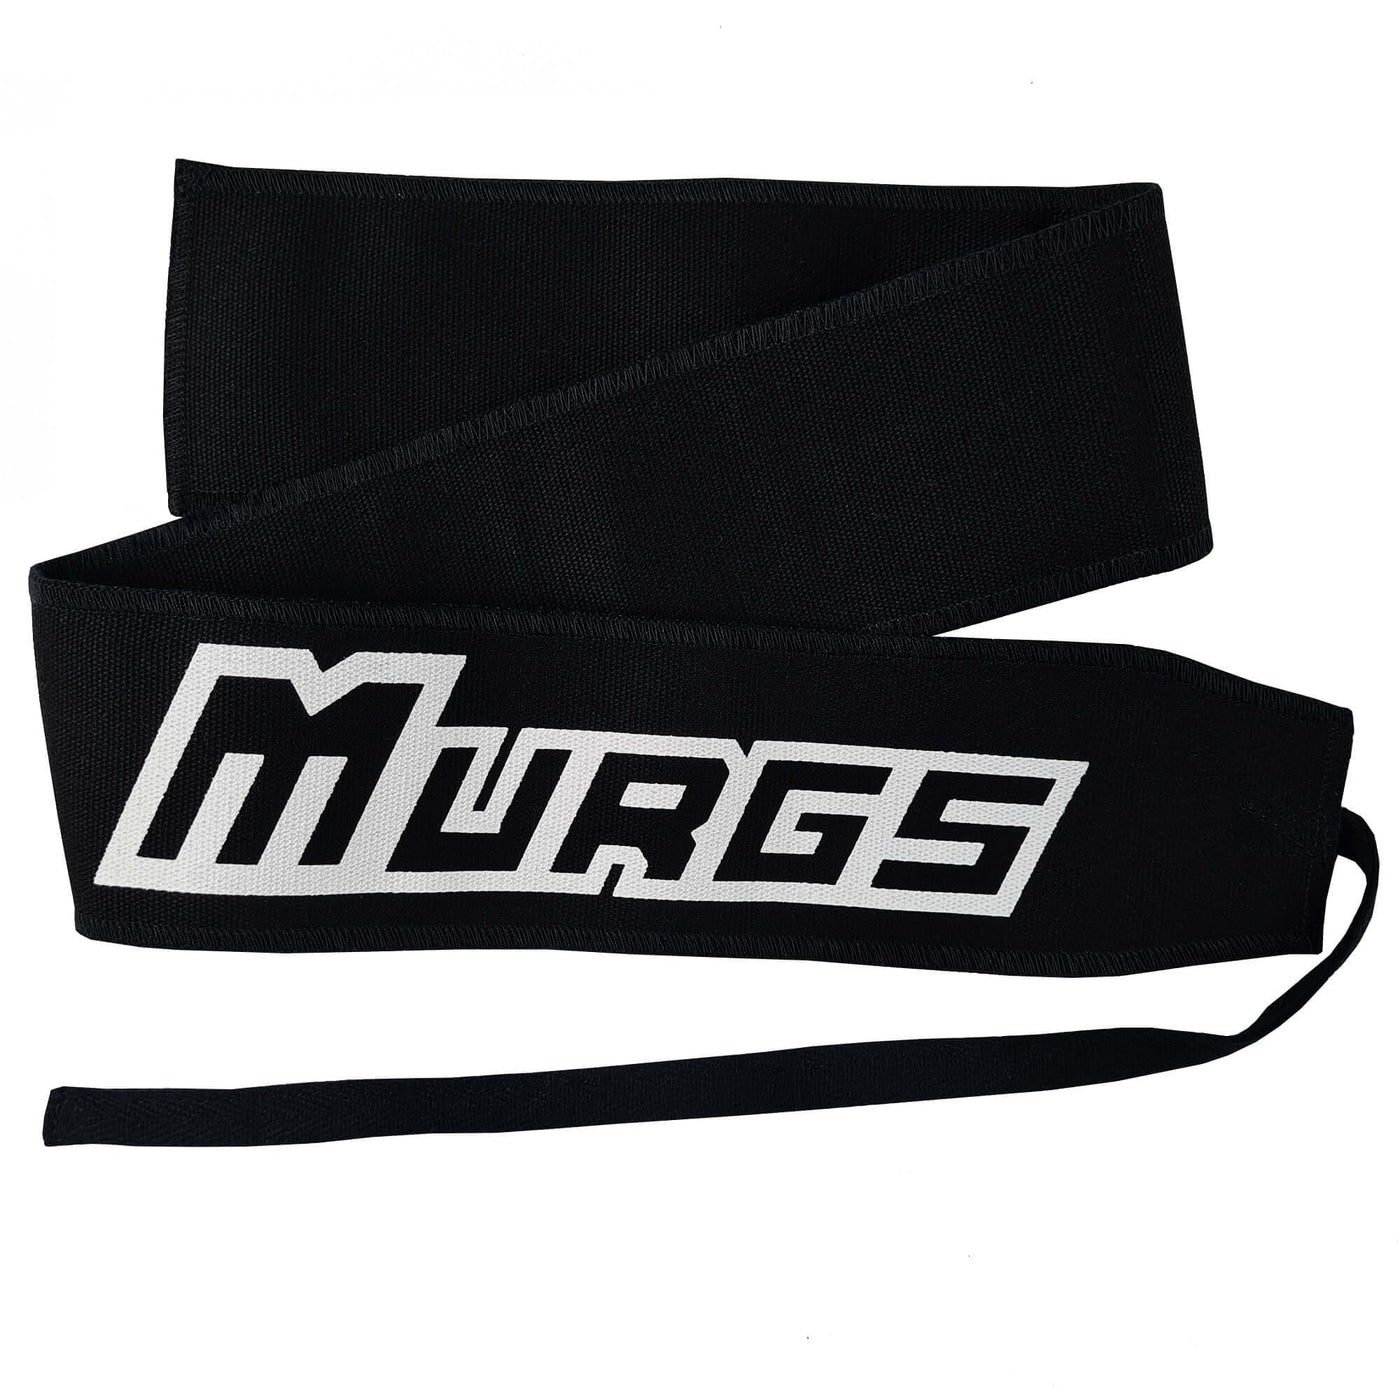 Murgs cotton wrist wrap with large Murgs logo